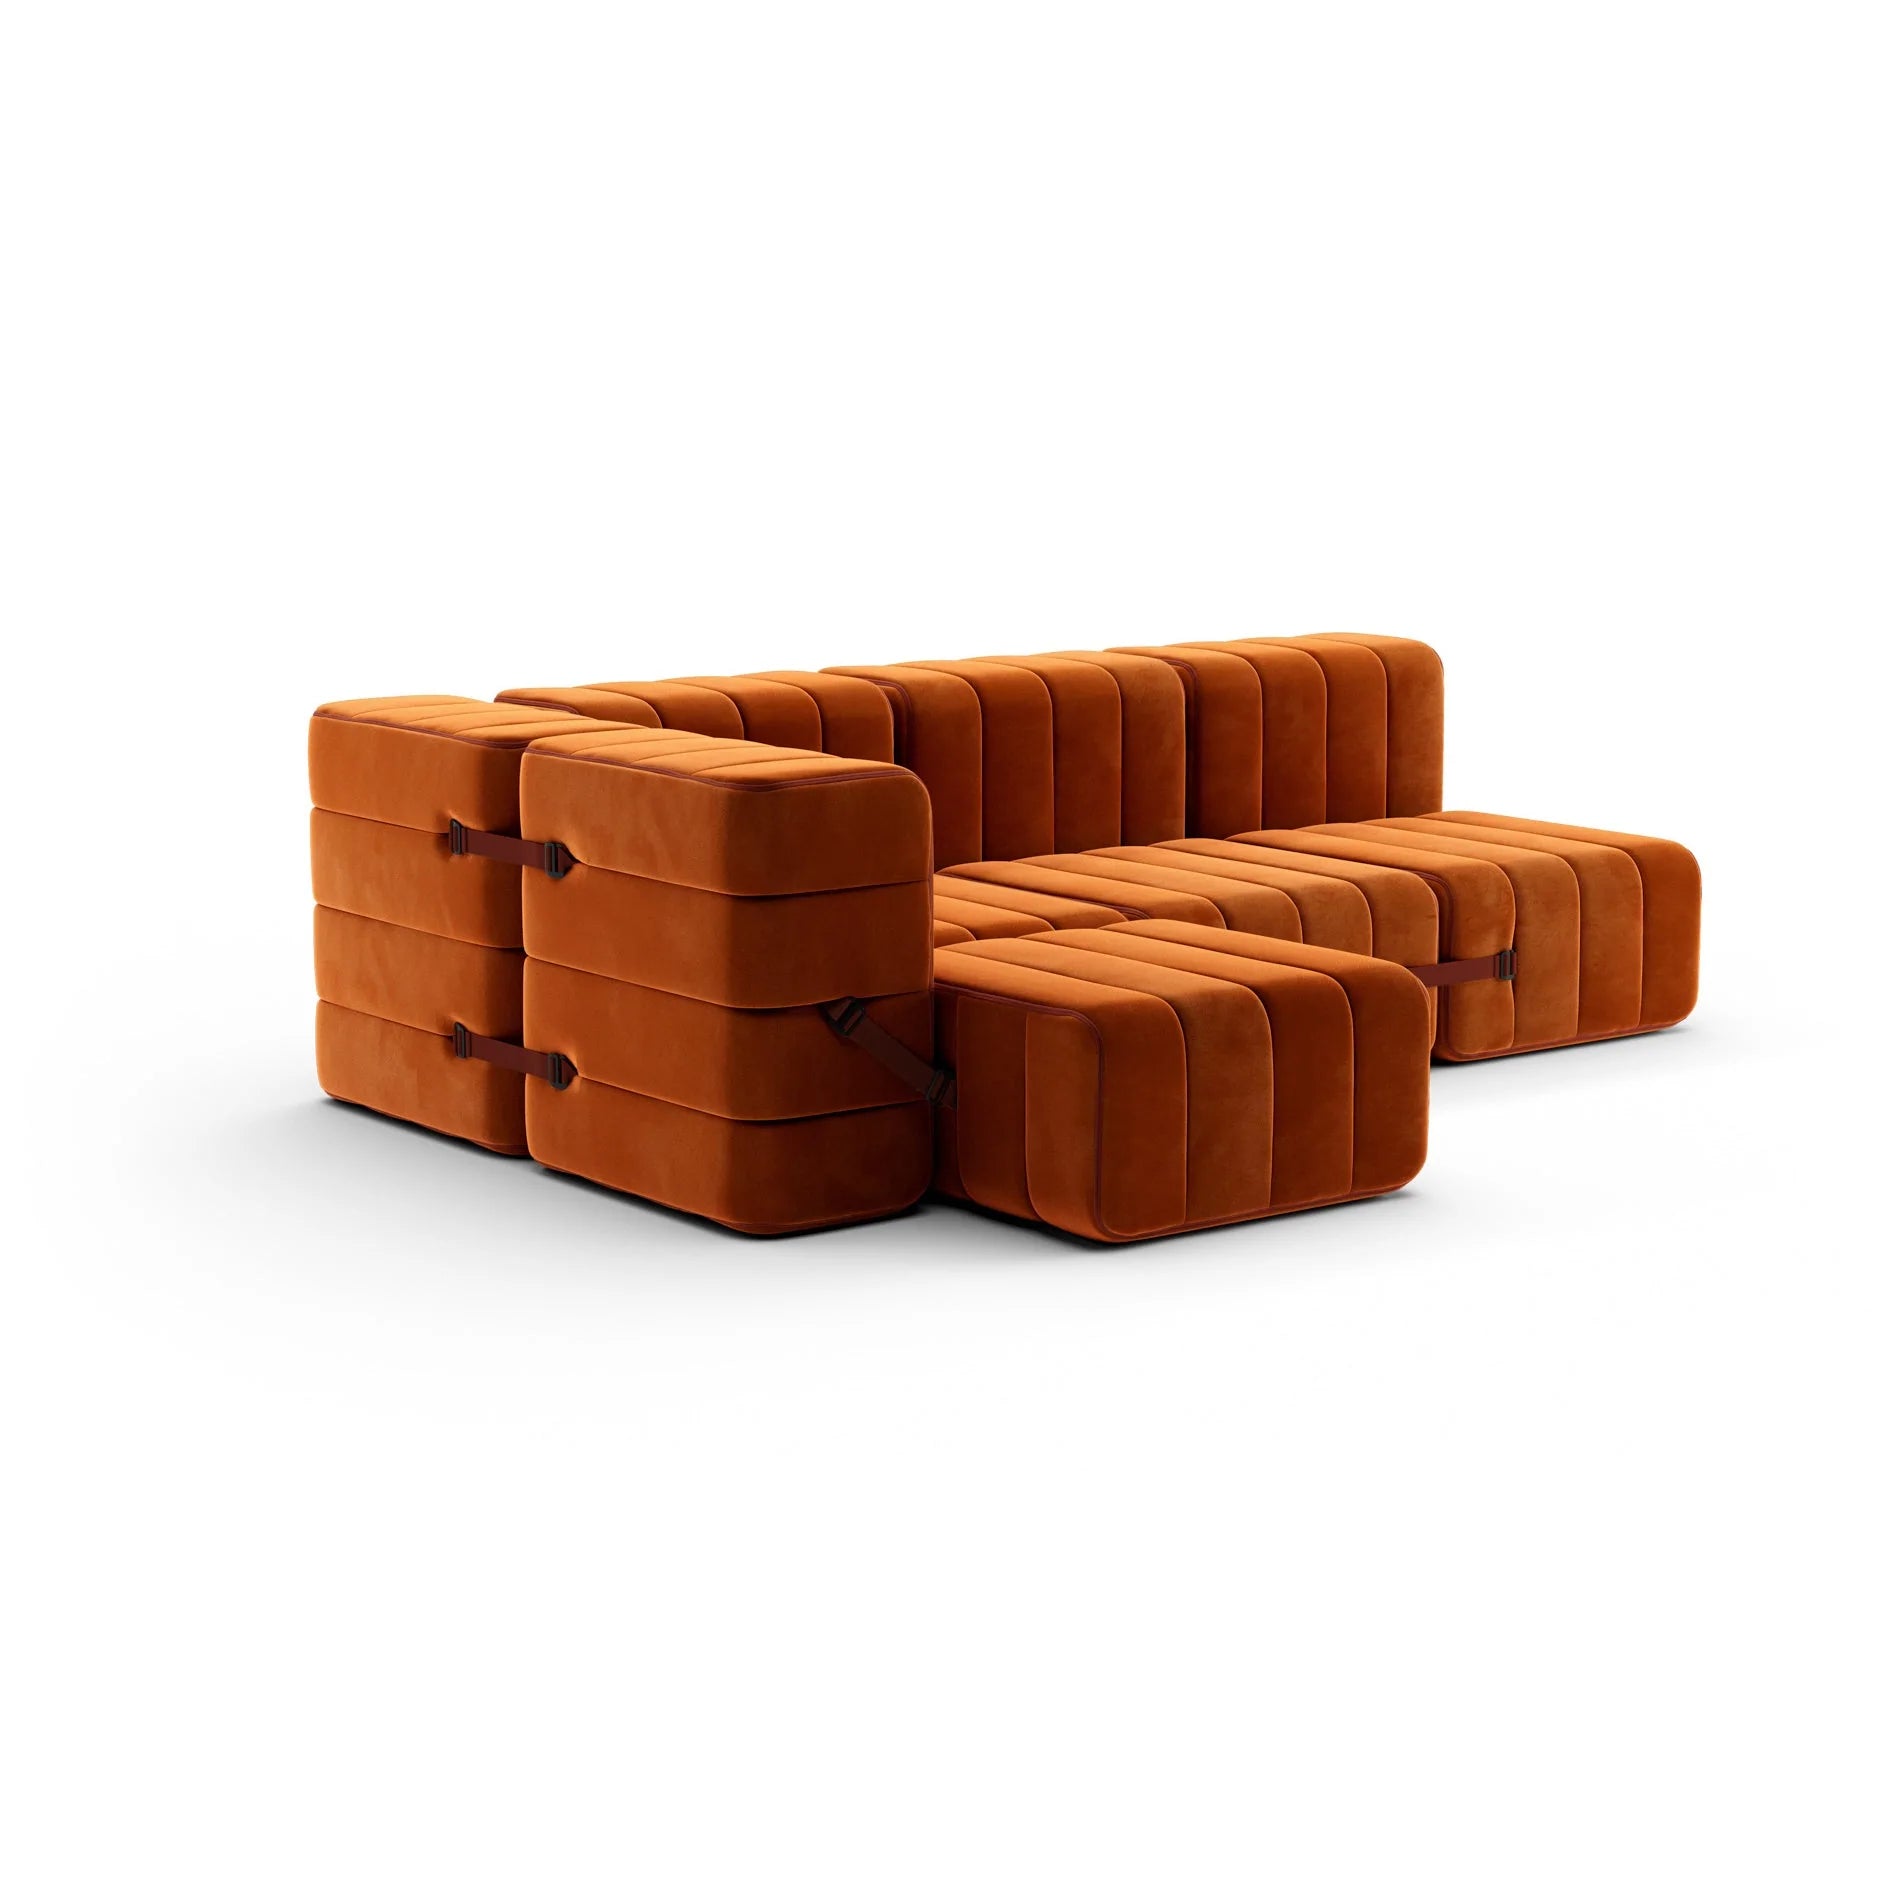 Curt modular sofa system - Barcelona Russet sofas from Ambivalenz